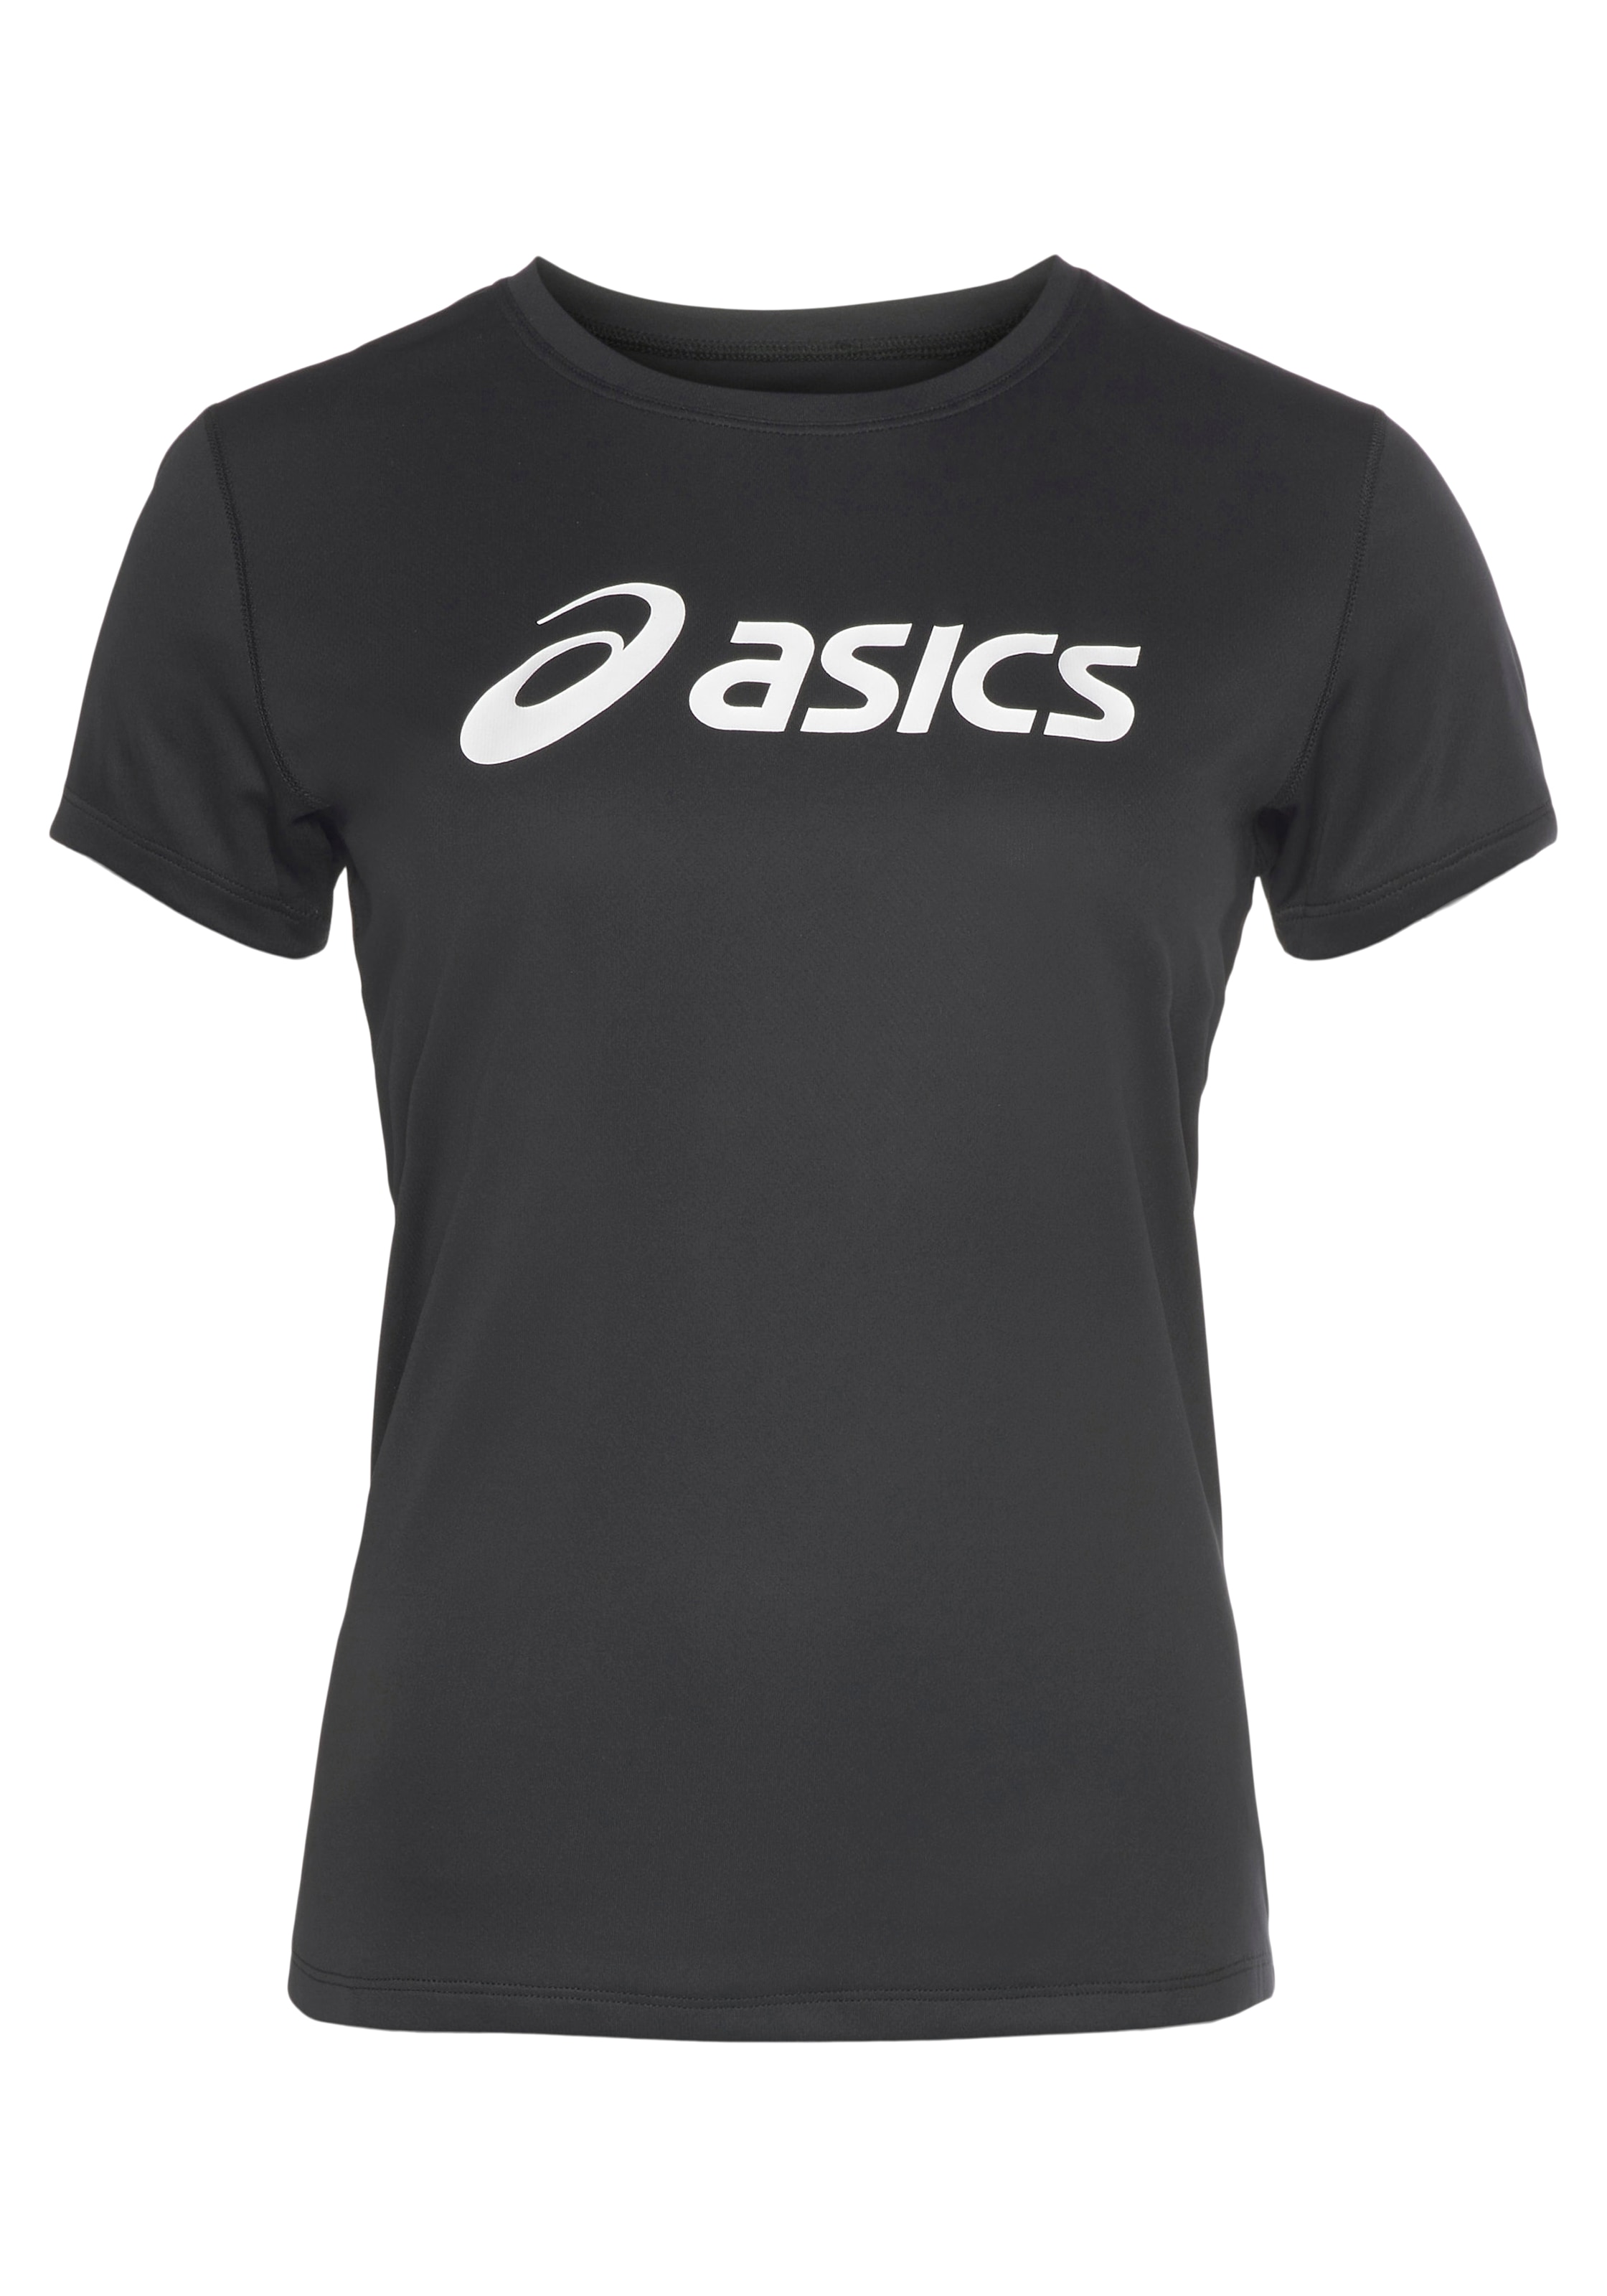 Asics Laufshirt »CORE ASICS TOP« kaufen online bei OTTO | T-Shirts